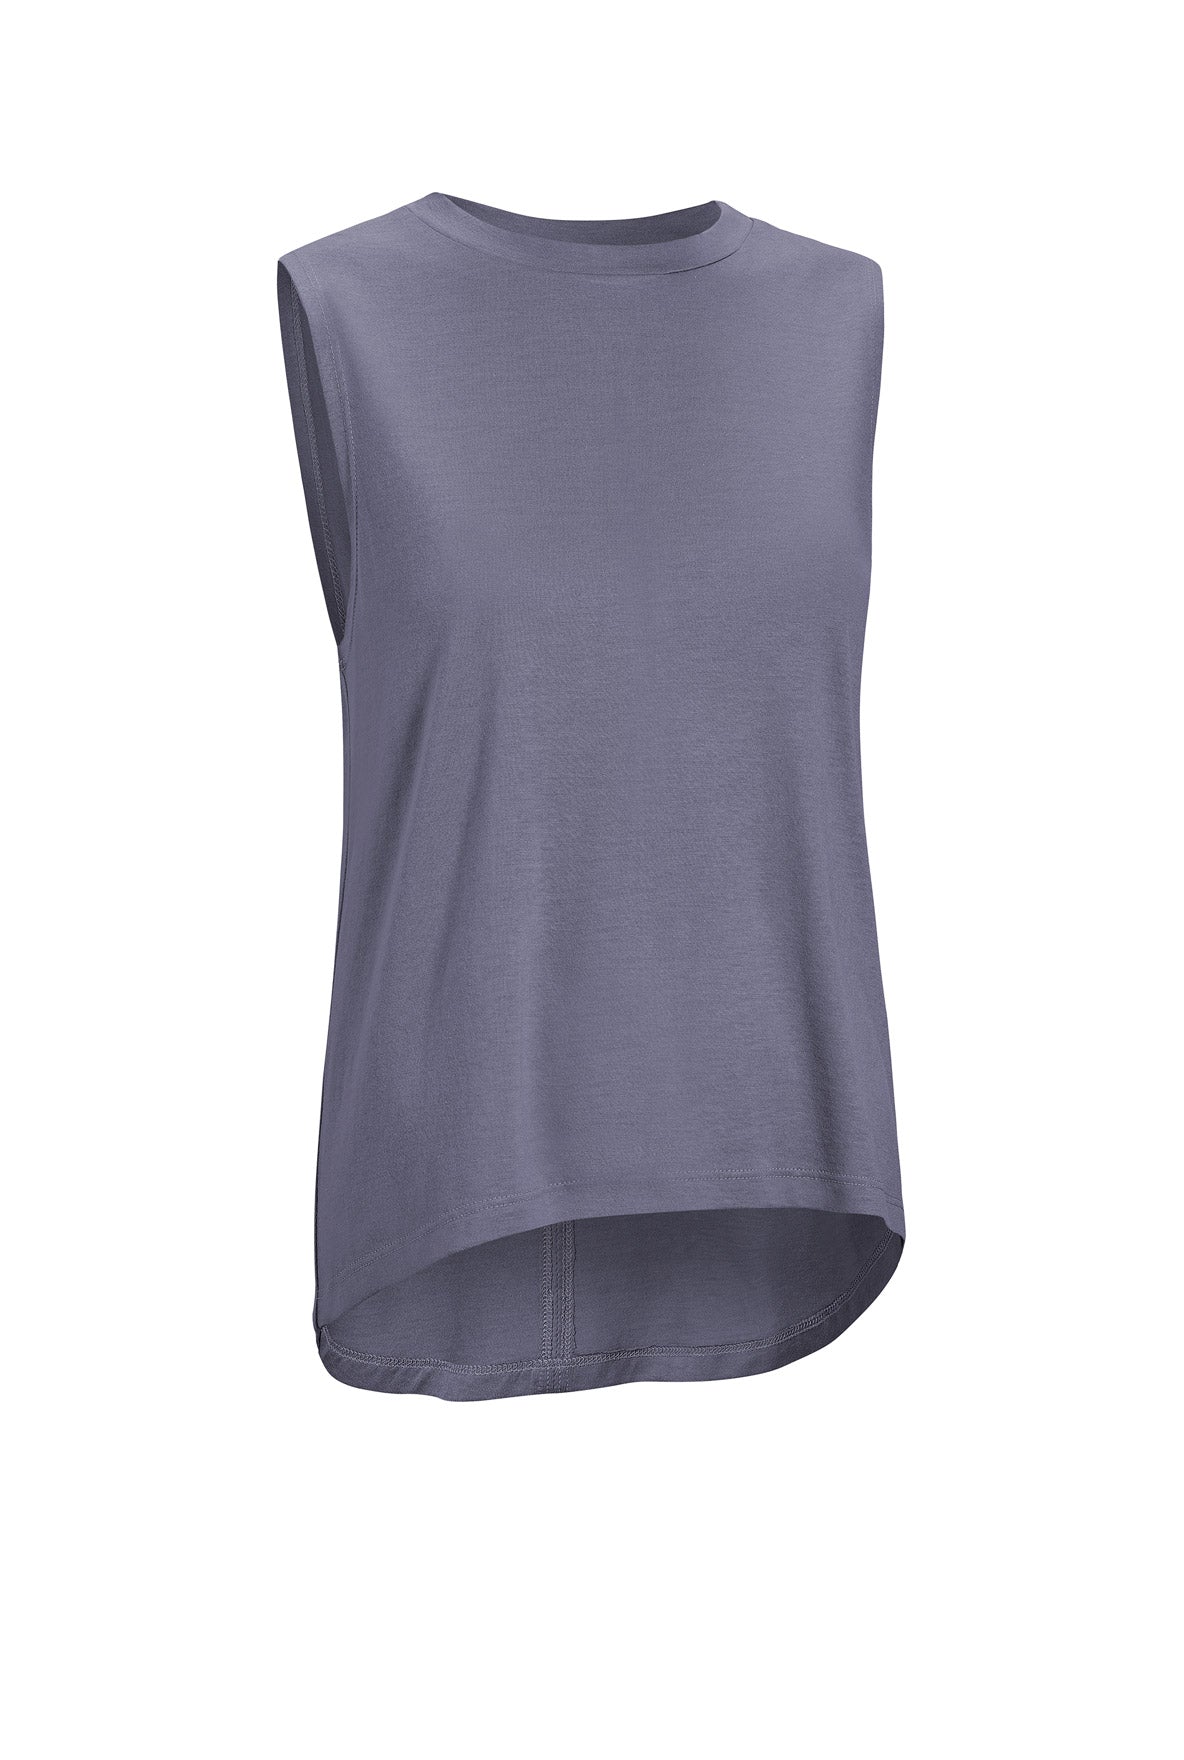 Expert Brand Wholesale Women's Sleeveless Eco-Friendly Hemp Cotton Fashion Muscle Tank Made In USA Graphite#graphite